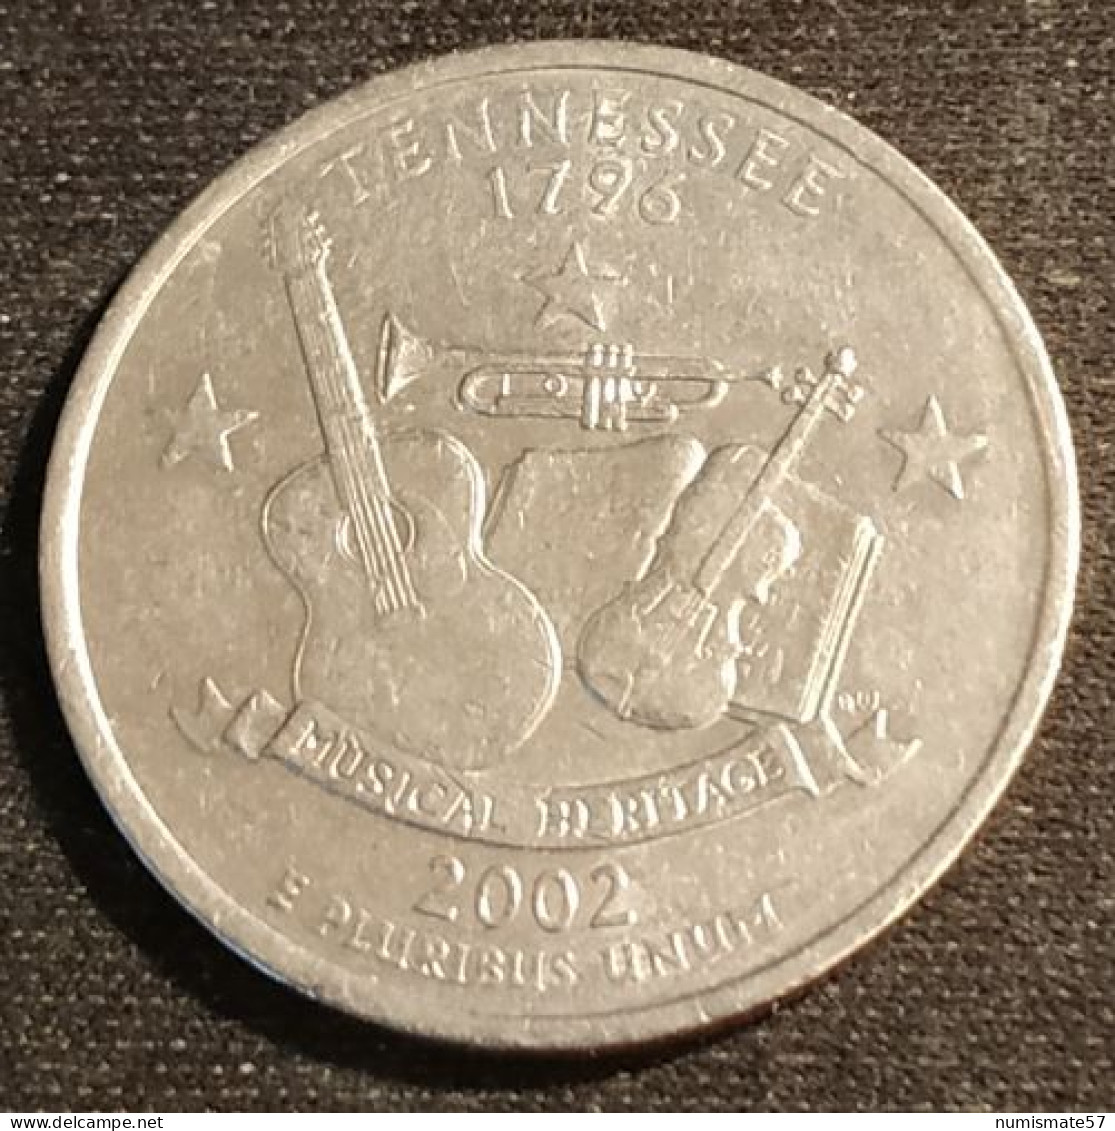 ETATS UNIS - USA - ¼ - 1/4 DOLLAR 2002 D - Tennessee - KM 331 - Quarter Dollar - 1999-2009: State Quarters